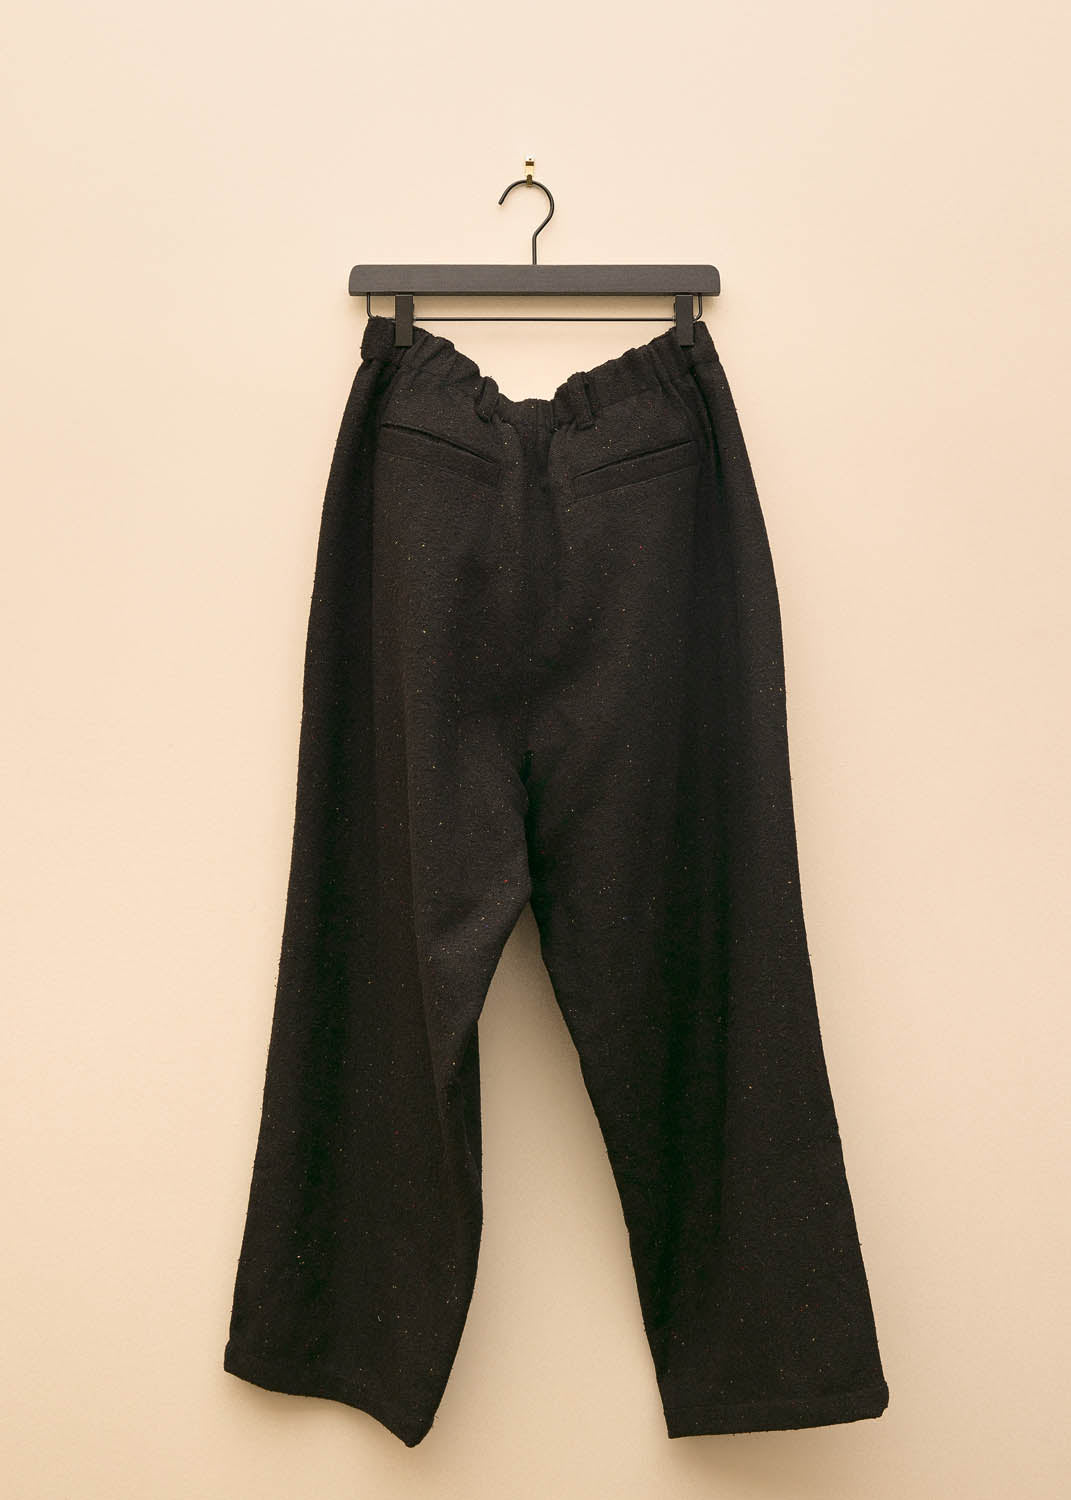 Black Speckled Elastic Waist Baggy Pants